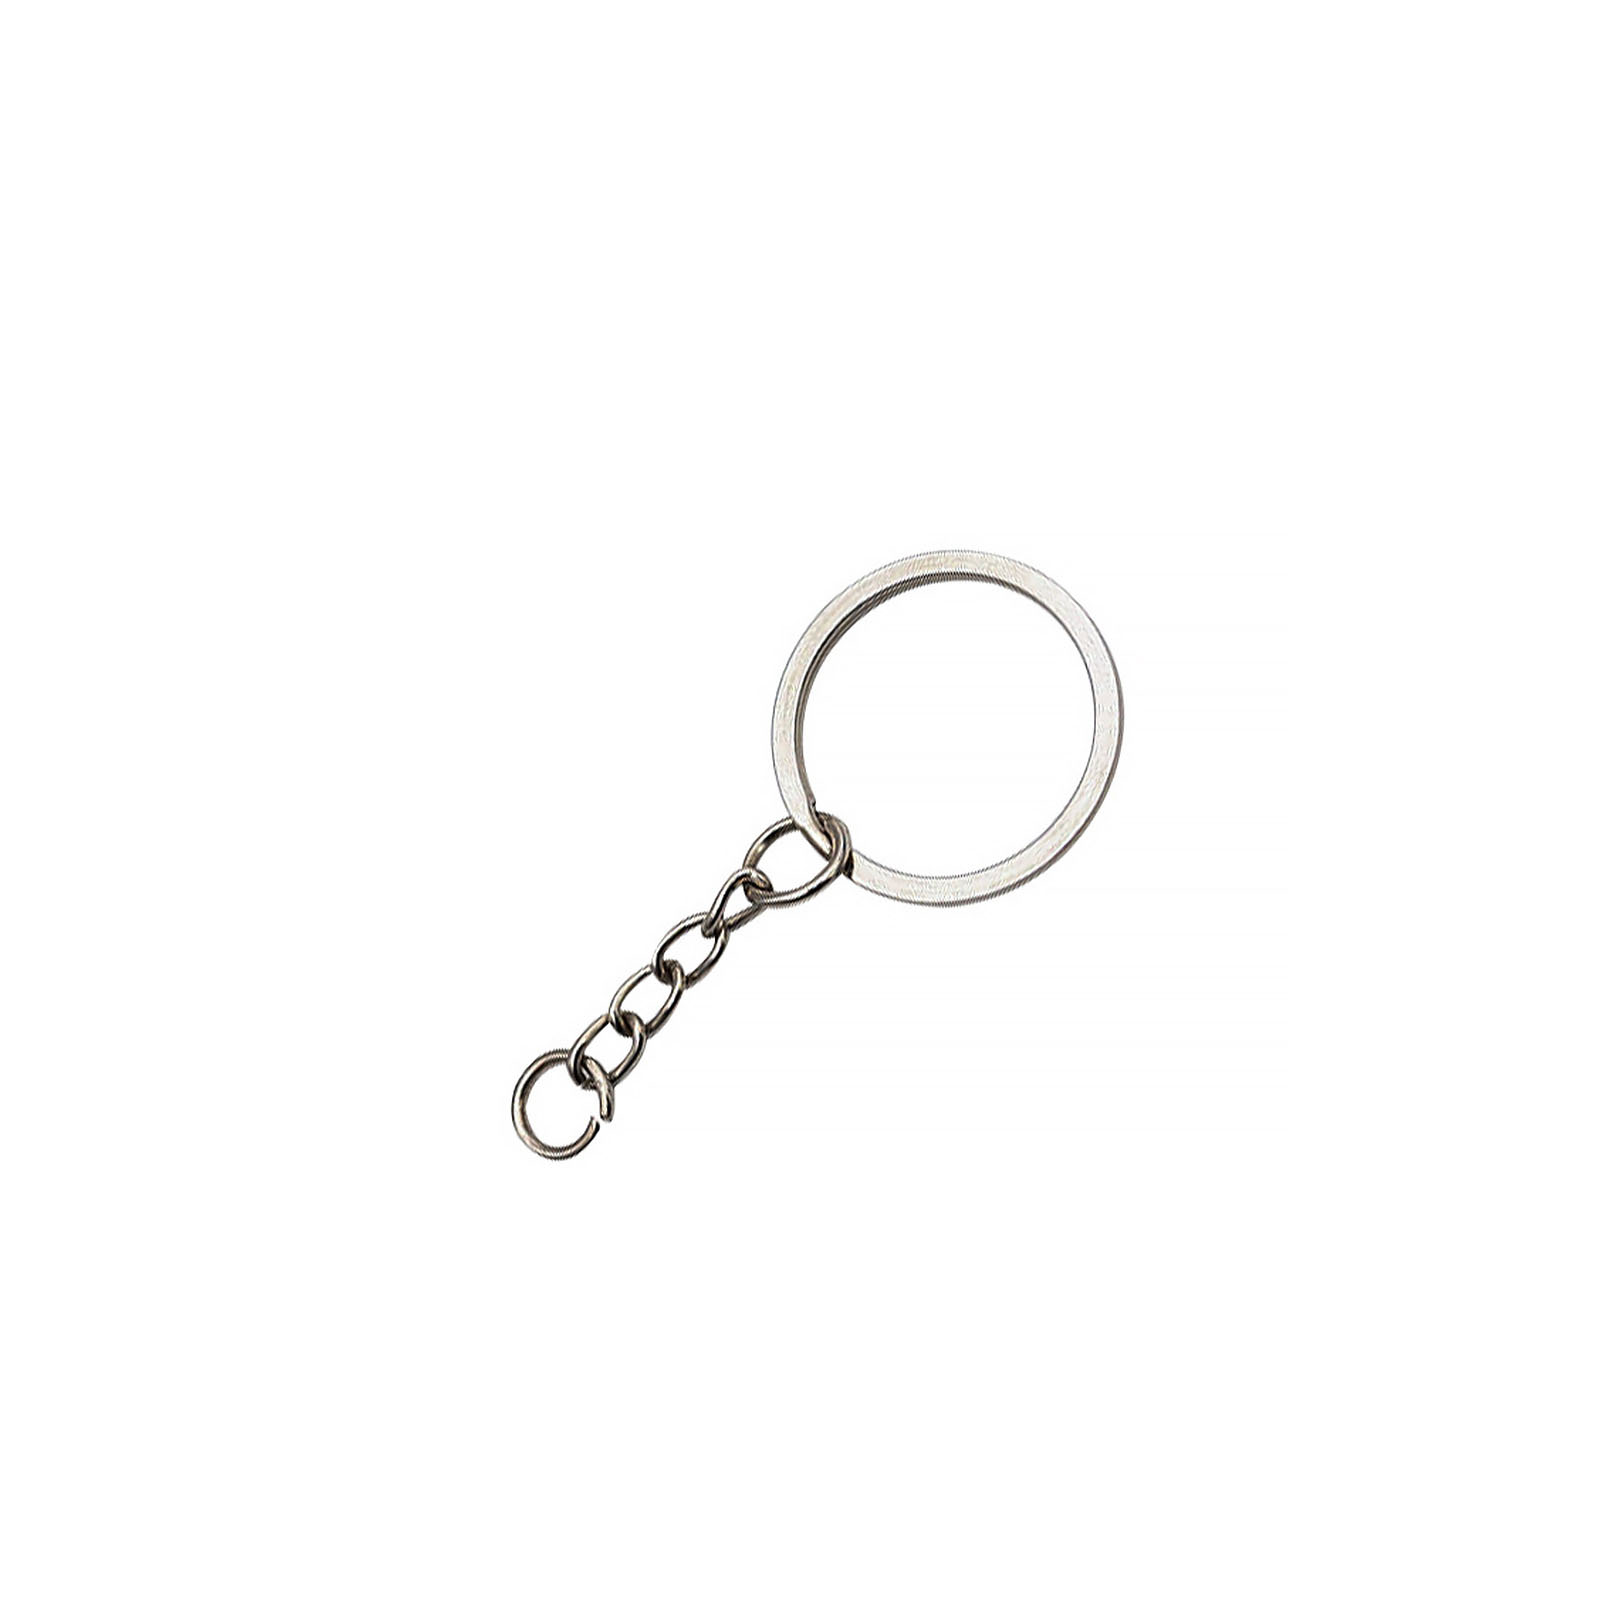 2:2.5 cm key chain (nickel color)